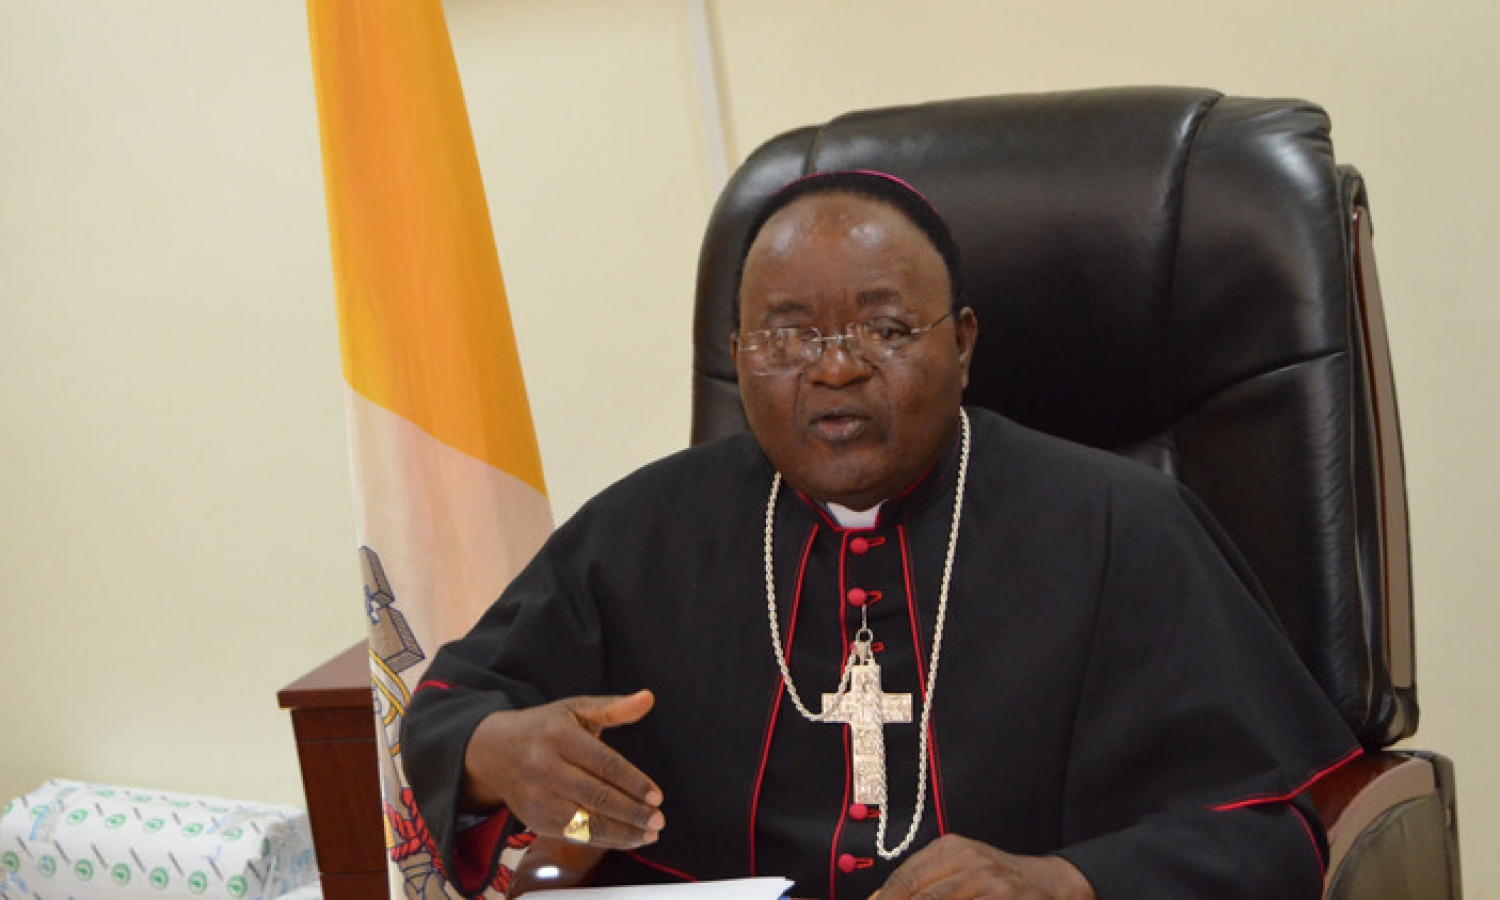 The Archbishop of Kampala Archdiocese, Most Rev. Cyprian Kizito Lwanga